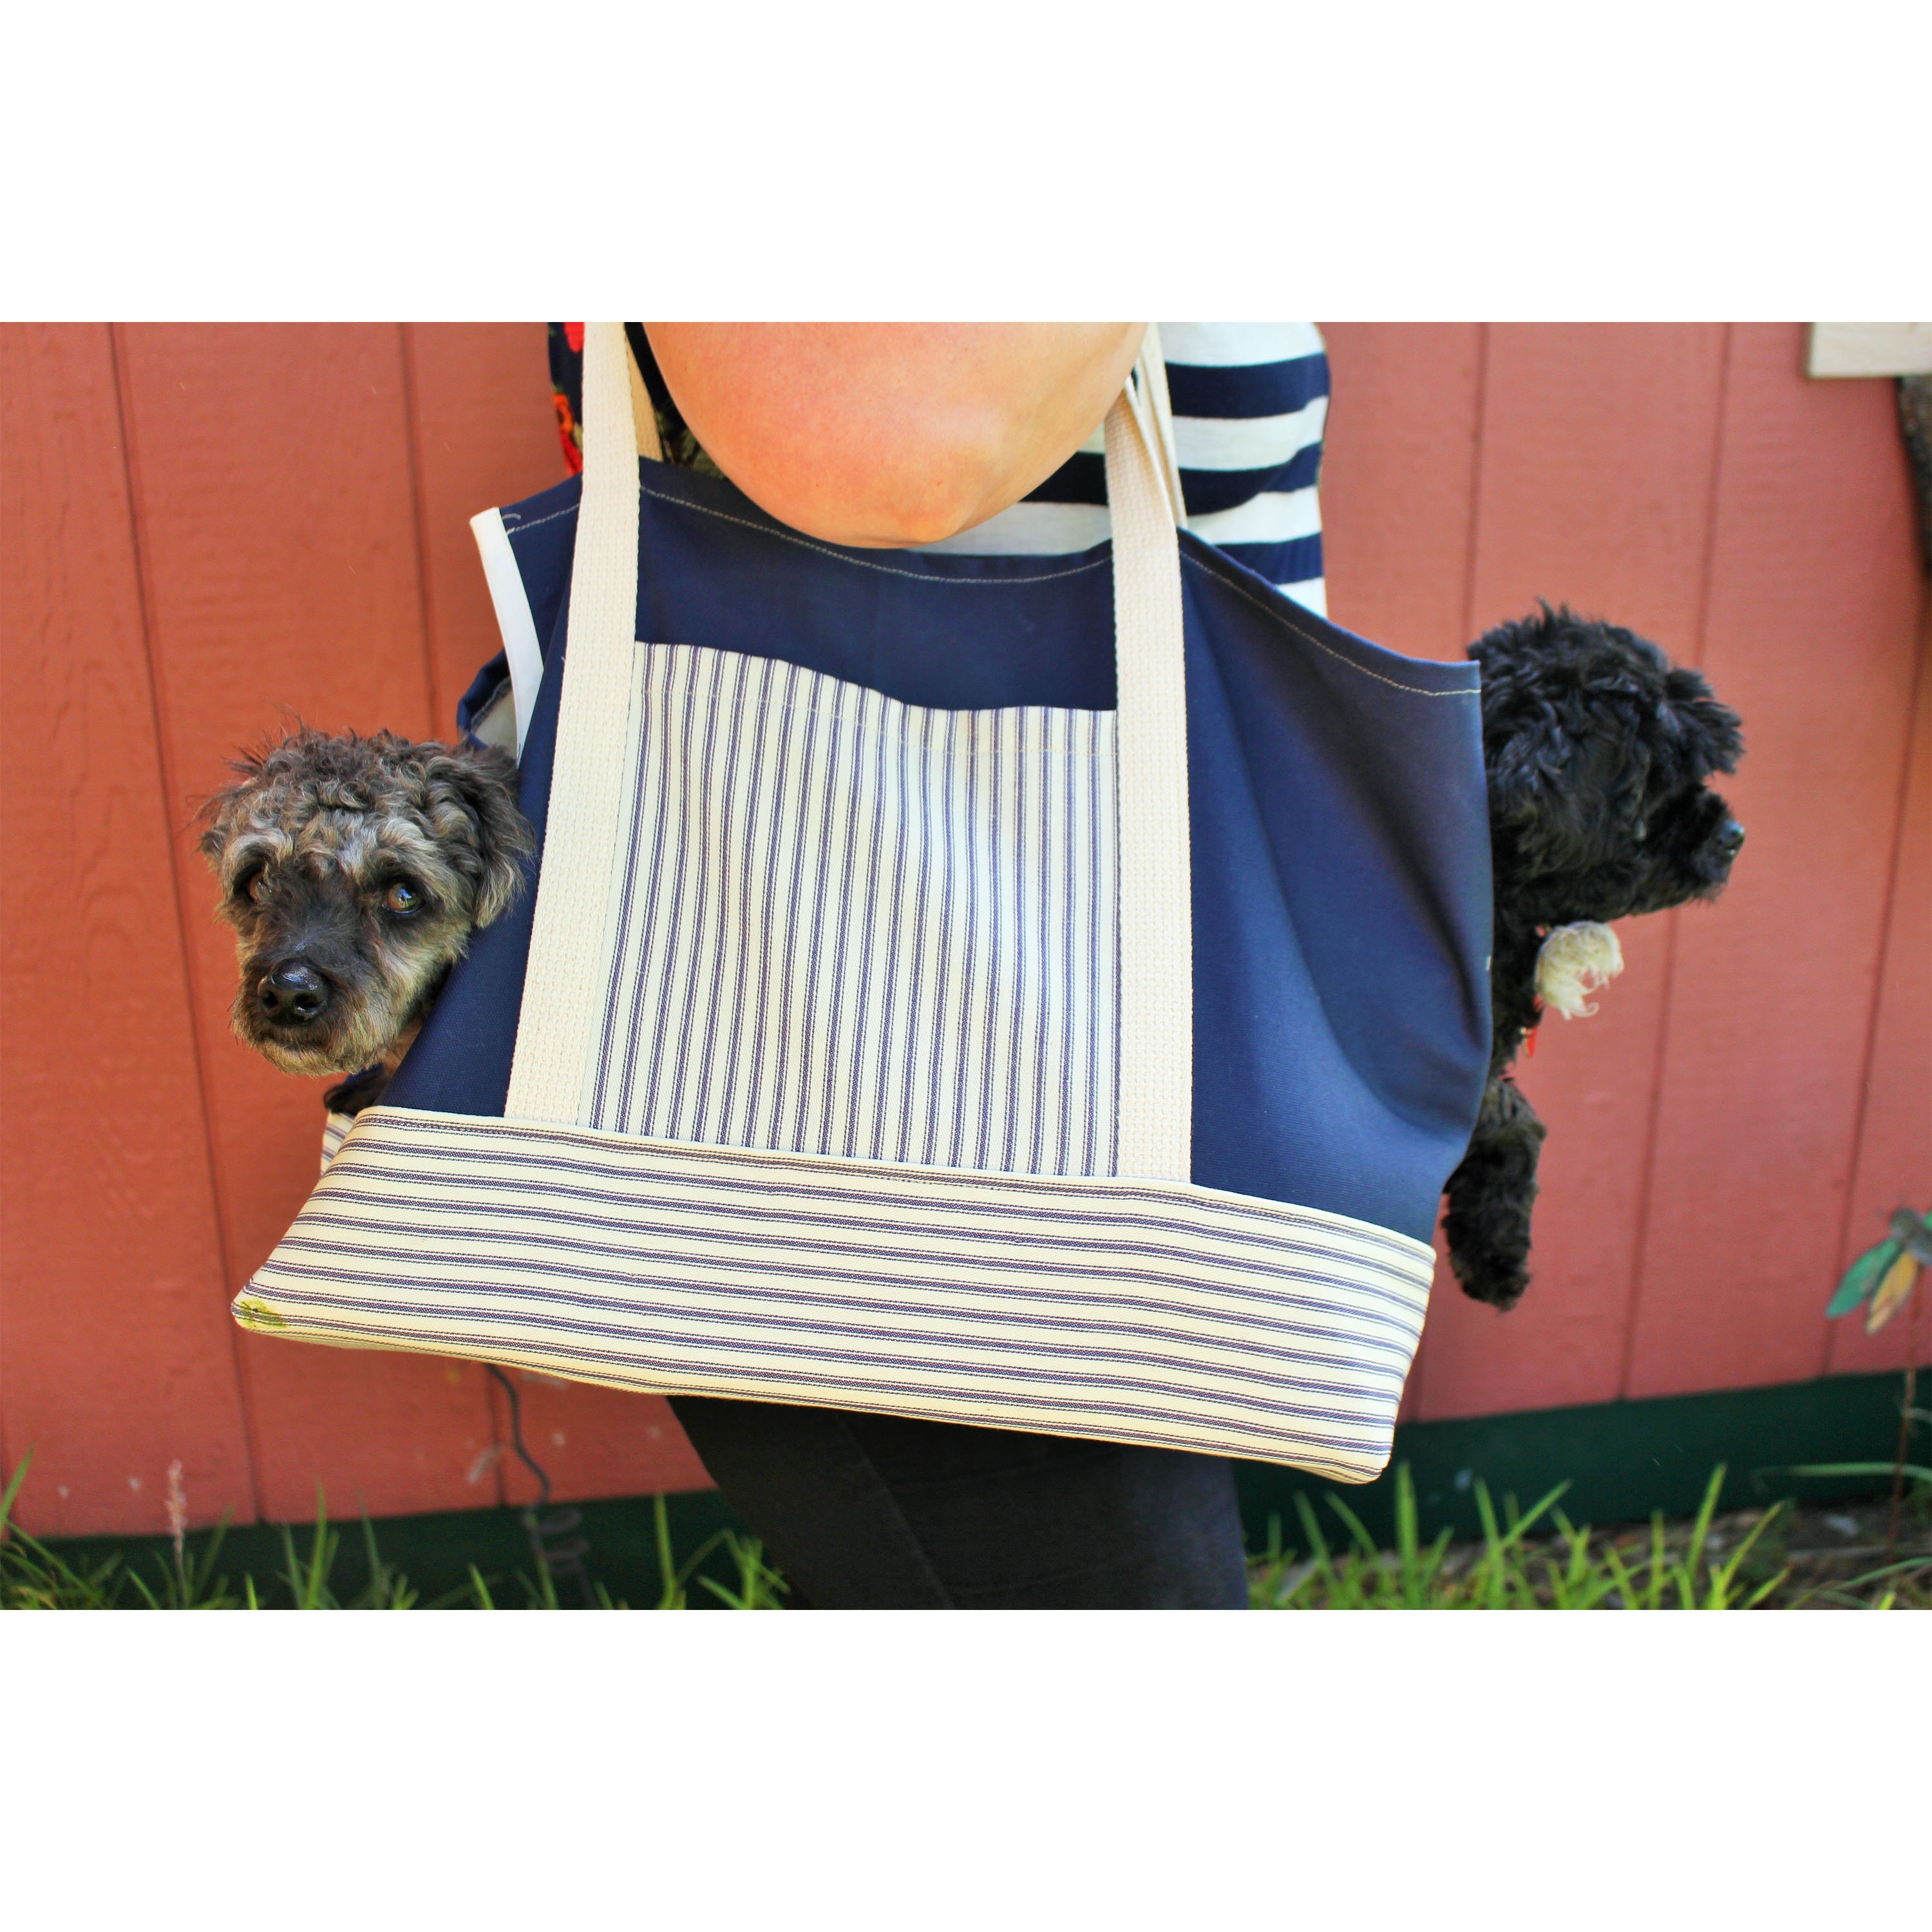 HobbyGift Sewing Machine Bag -PVC - Dogs - Storage - Carry - Blue - Zip  Pocket - MR4660\619